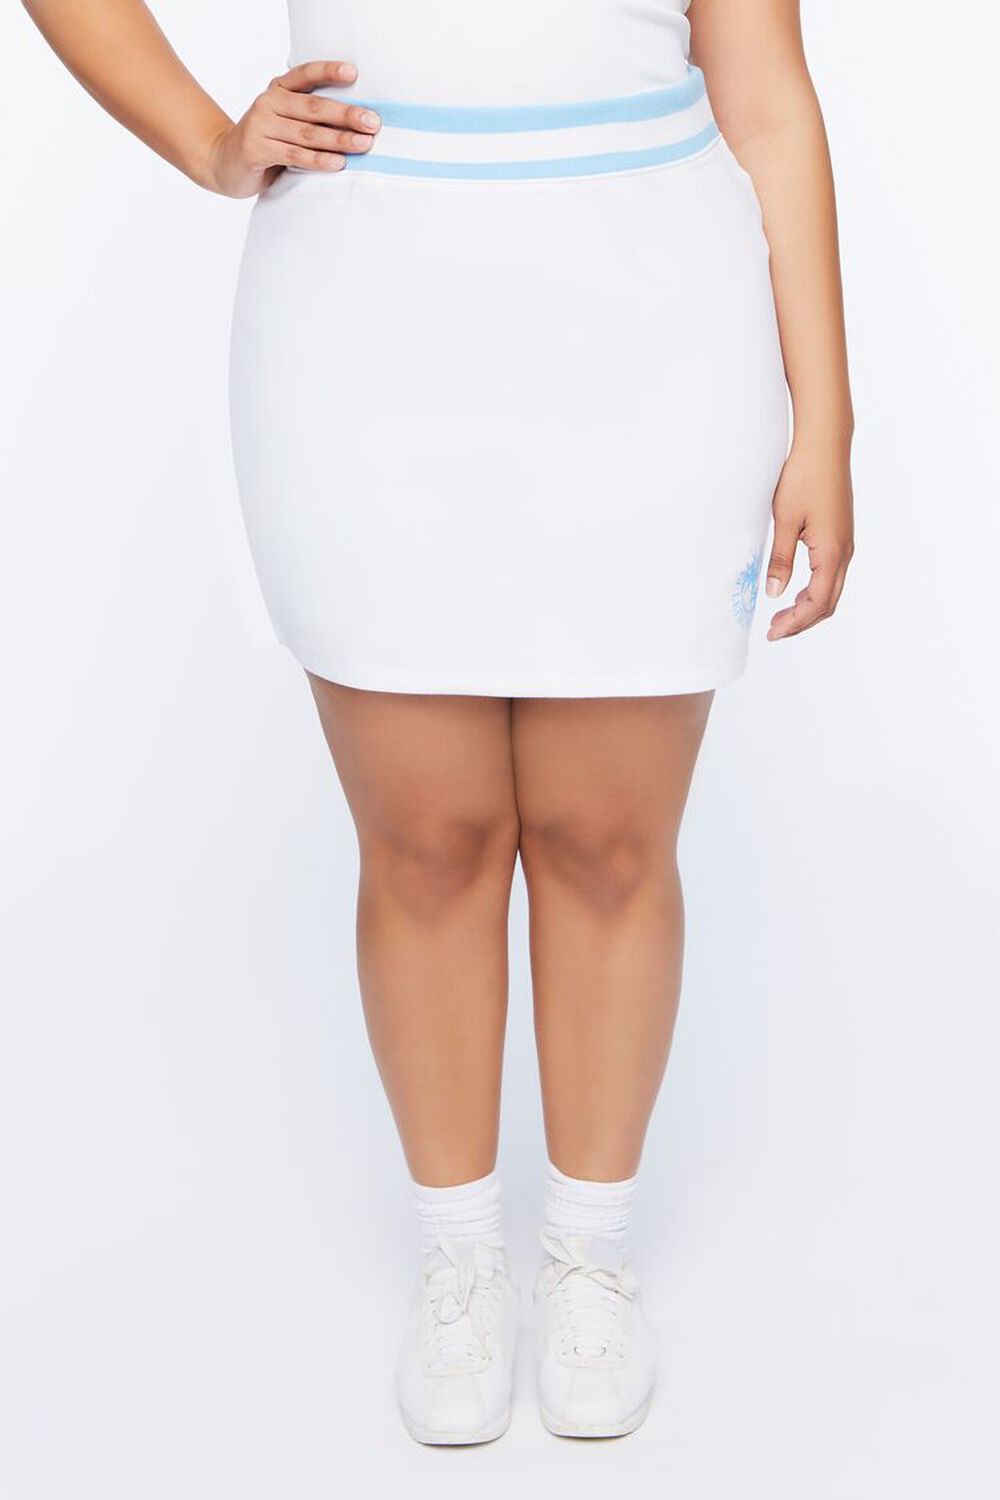 WHITE/BLUE Plus Size Palm Beach Graphic Skirt, image 2